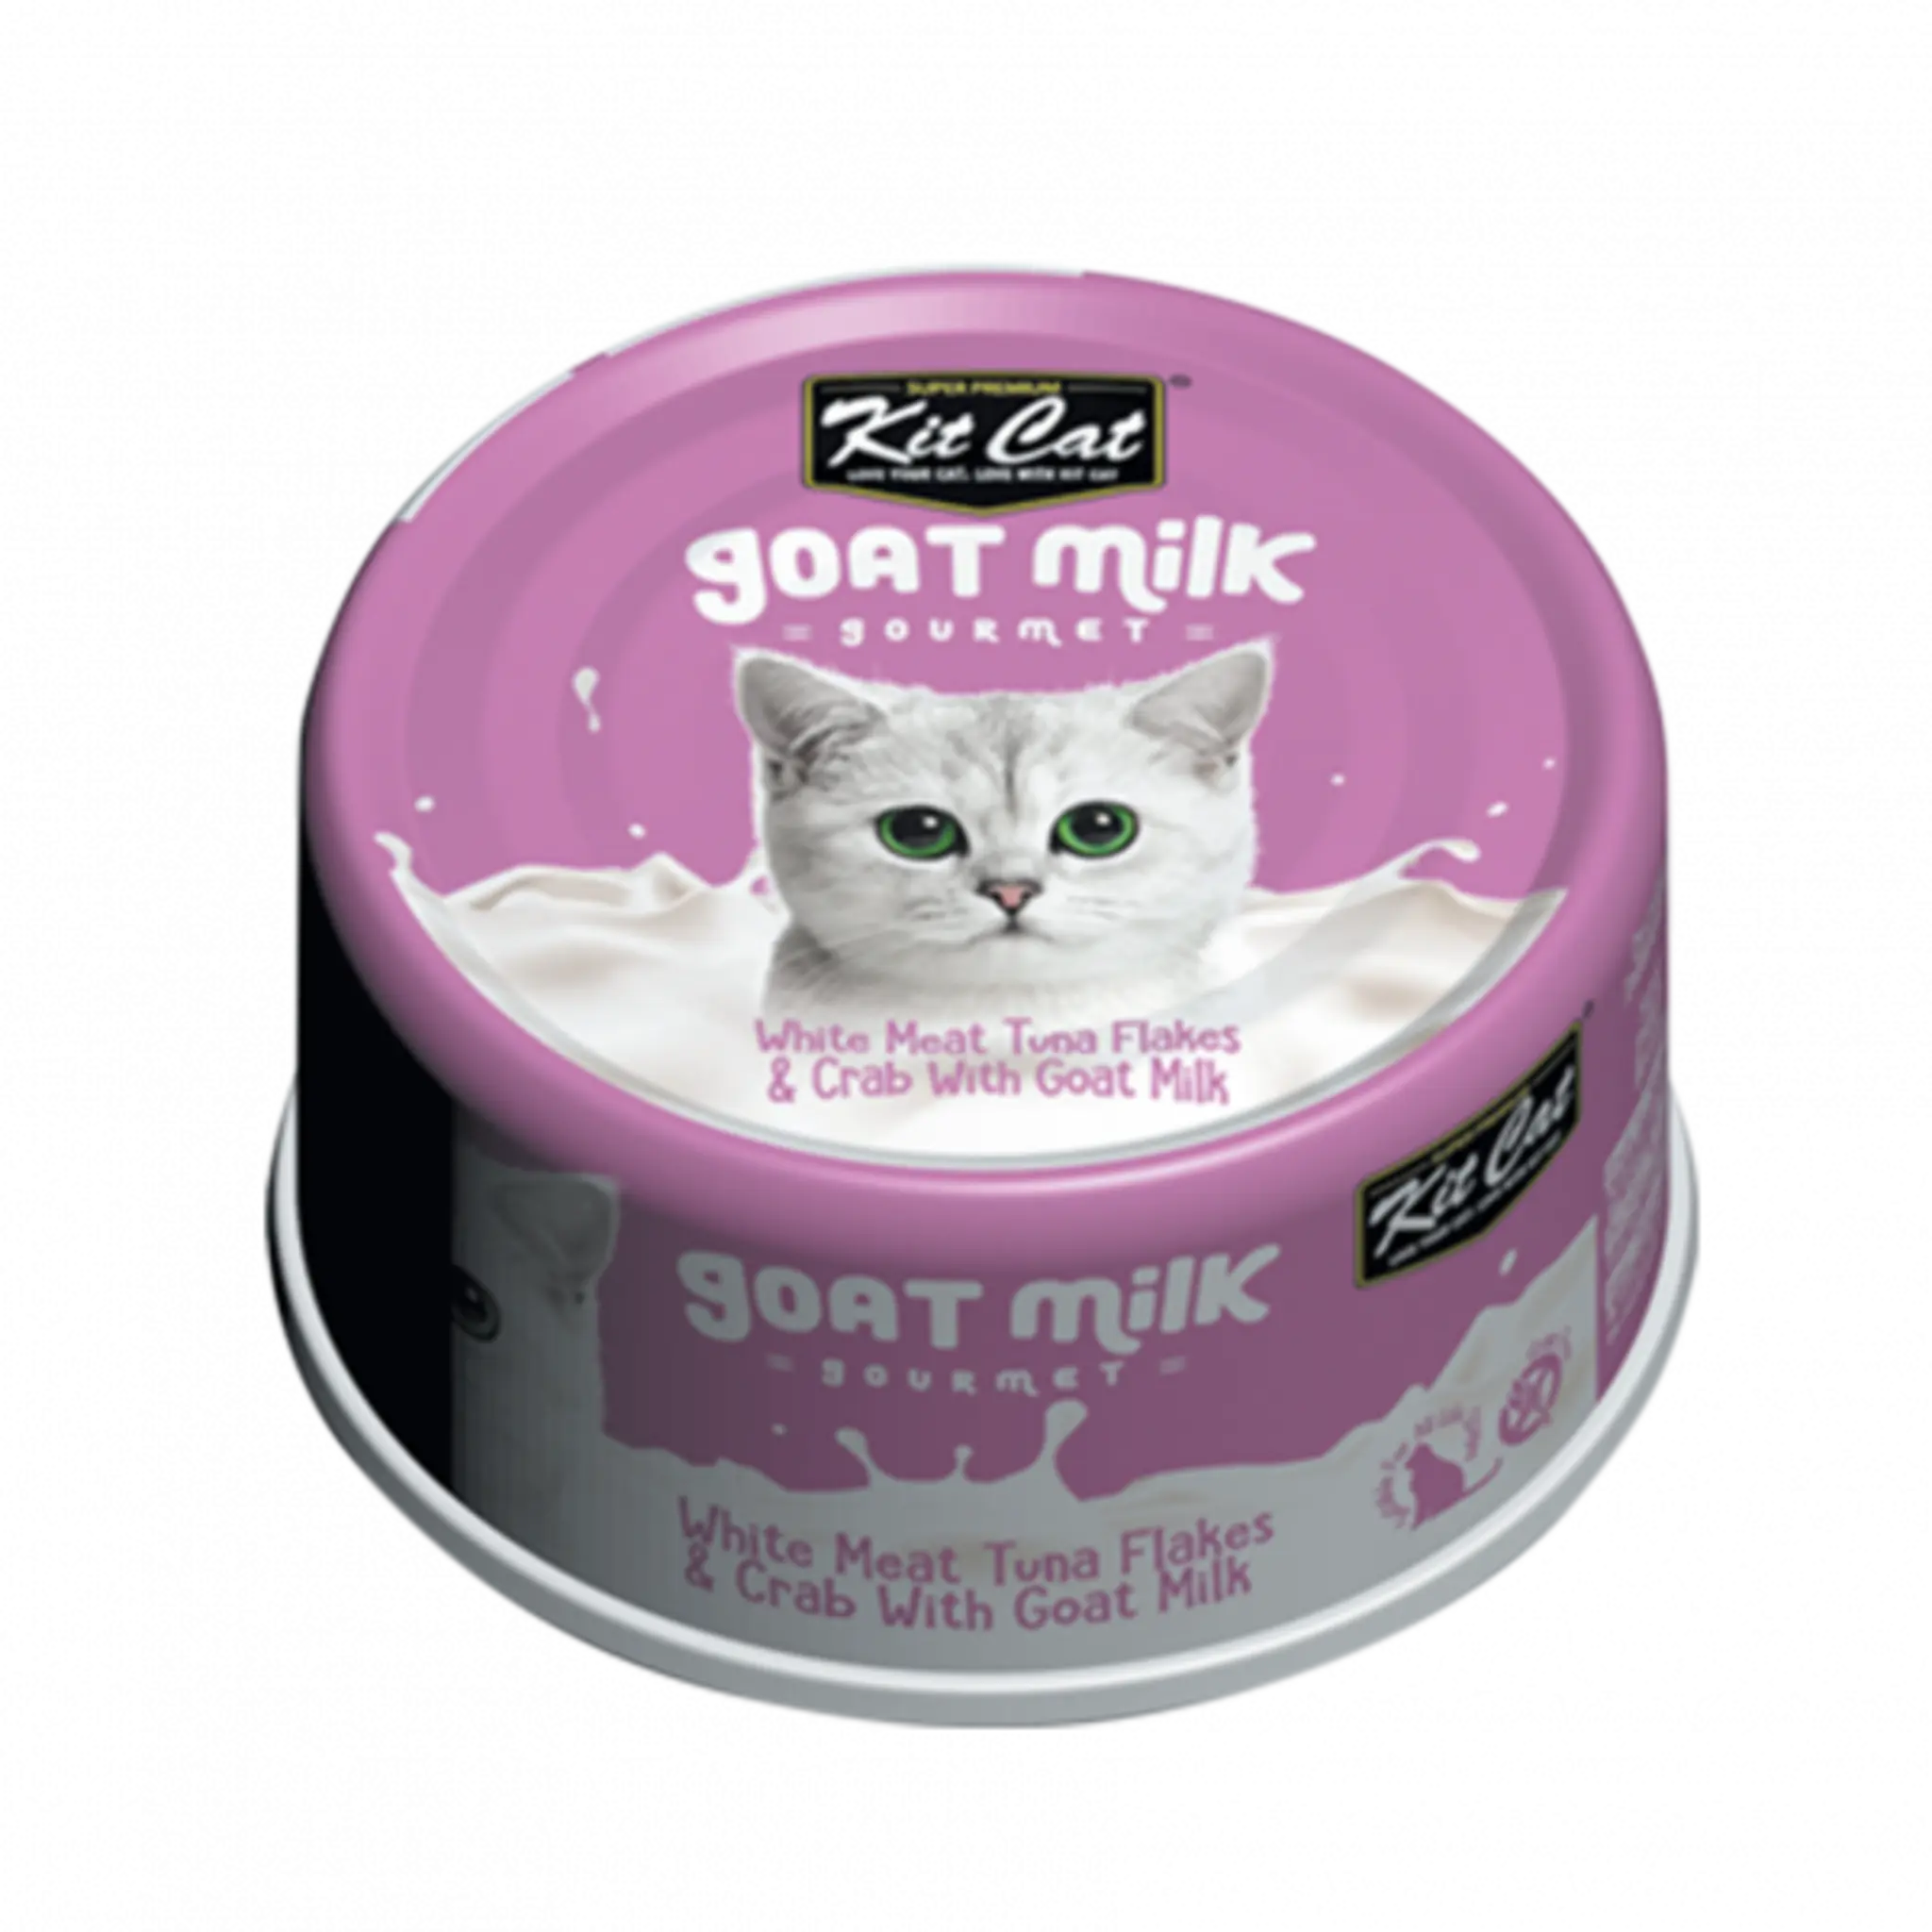 Kit Cat Goat Milk White meat Tuna Flakes & Crabs Wet Food-70g